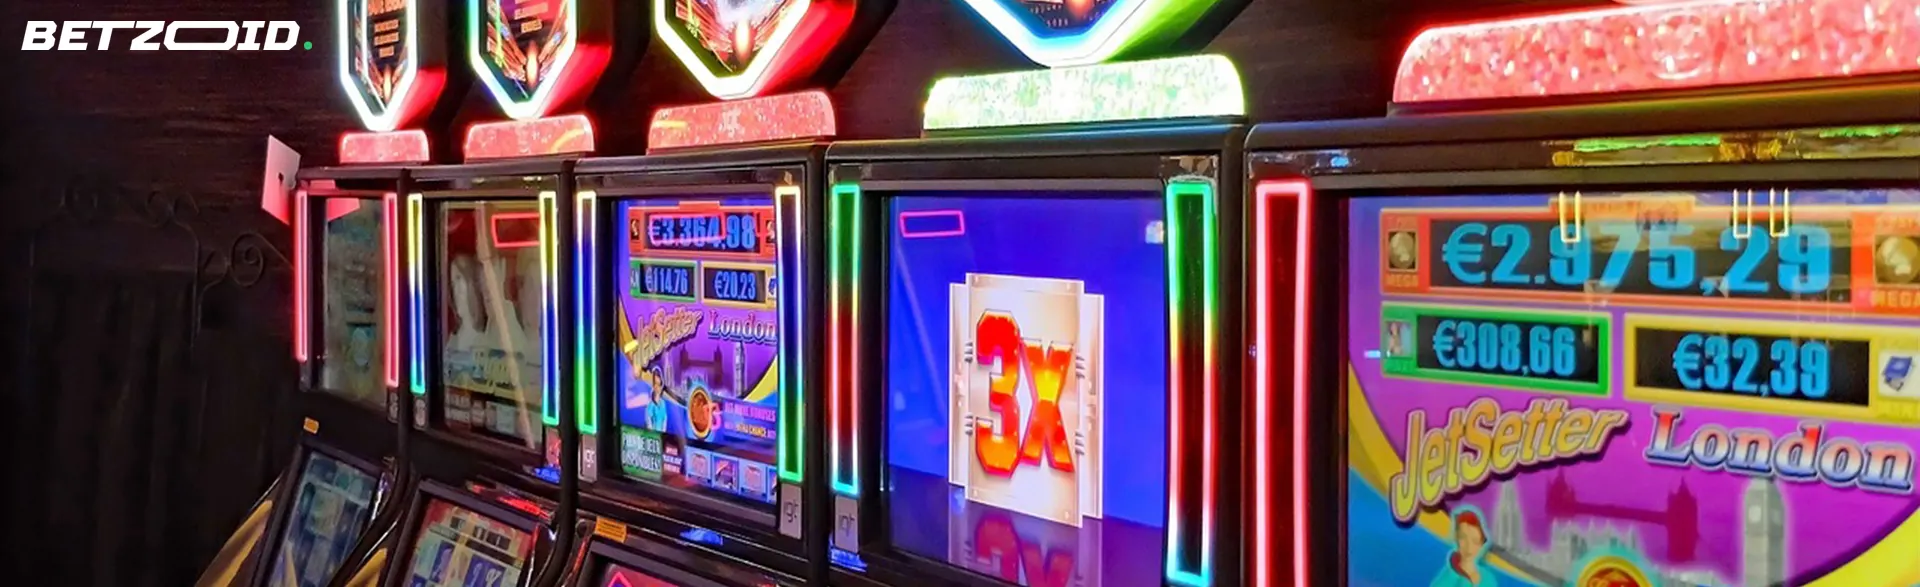 Vibrant display of slot machines, indicating various game titles and jackpot amounts.